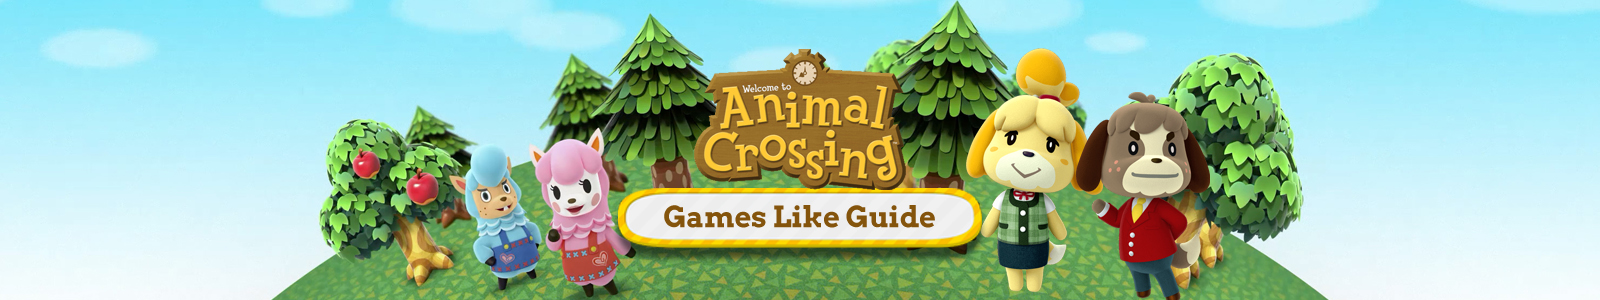 Guida a giochi simili a Animal Crossing New Horizons